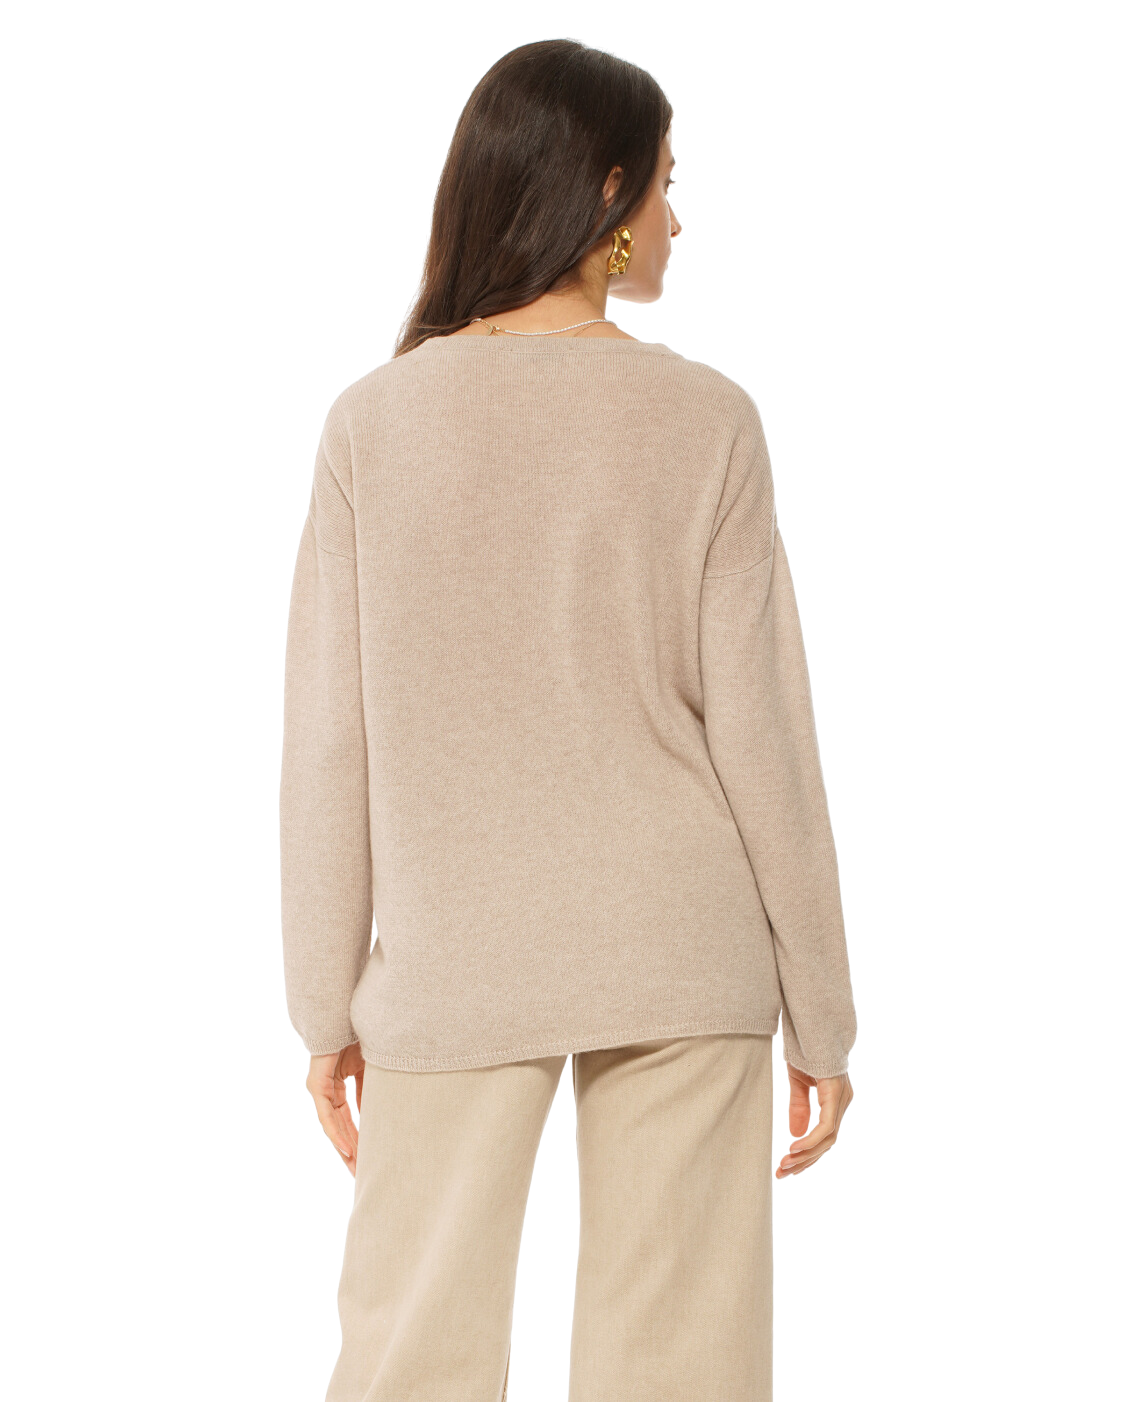 Monticelli Women's Oversized Cashmere Boatneck Sweater Beige 3